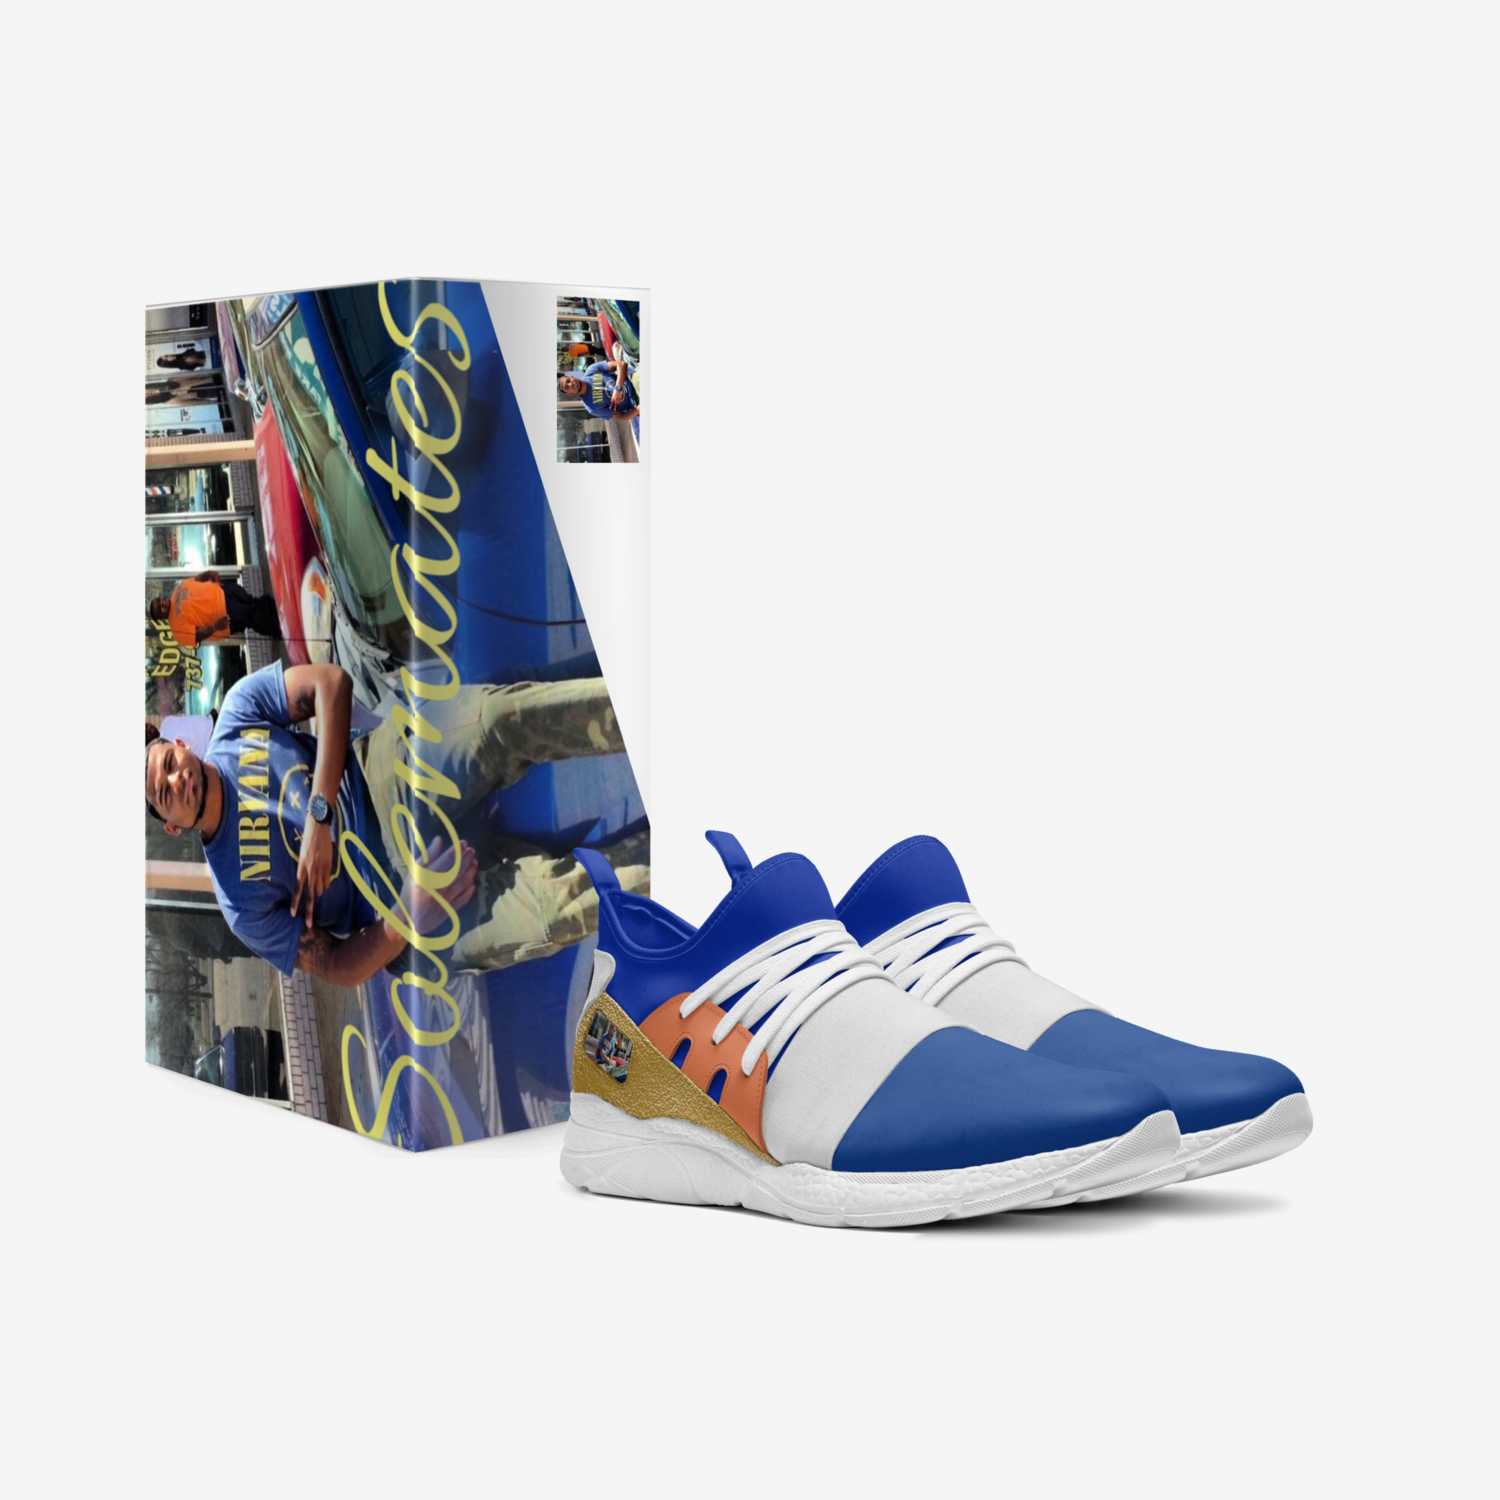 Amir custom made in Italy shoes by Sanaya Jeffery | Box view